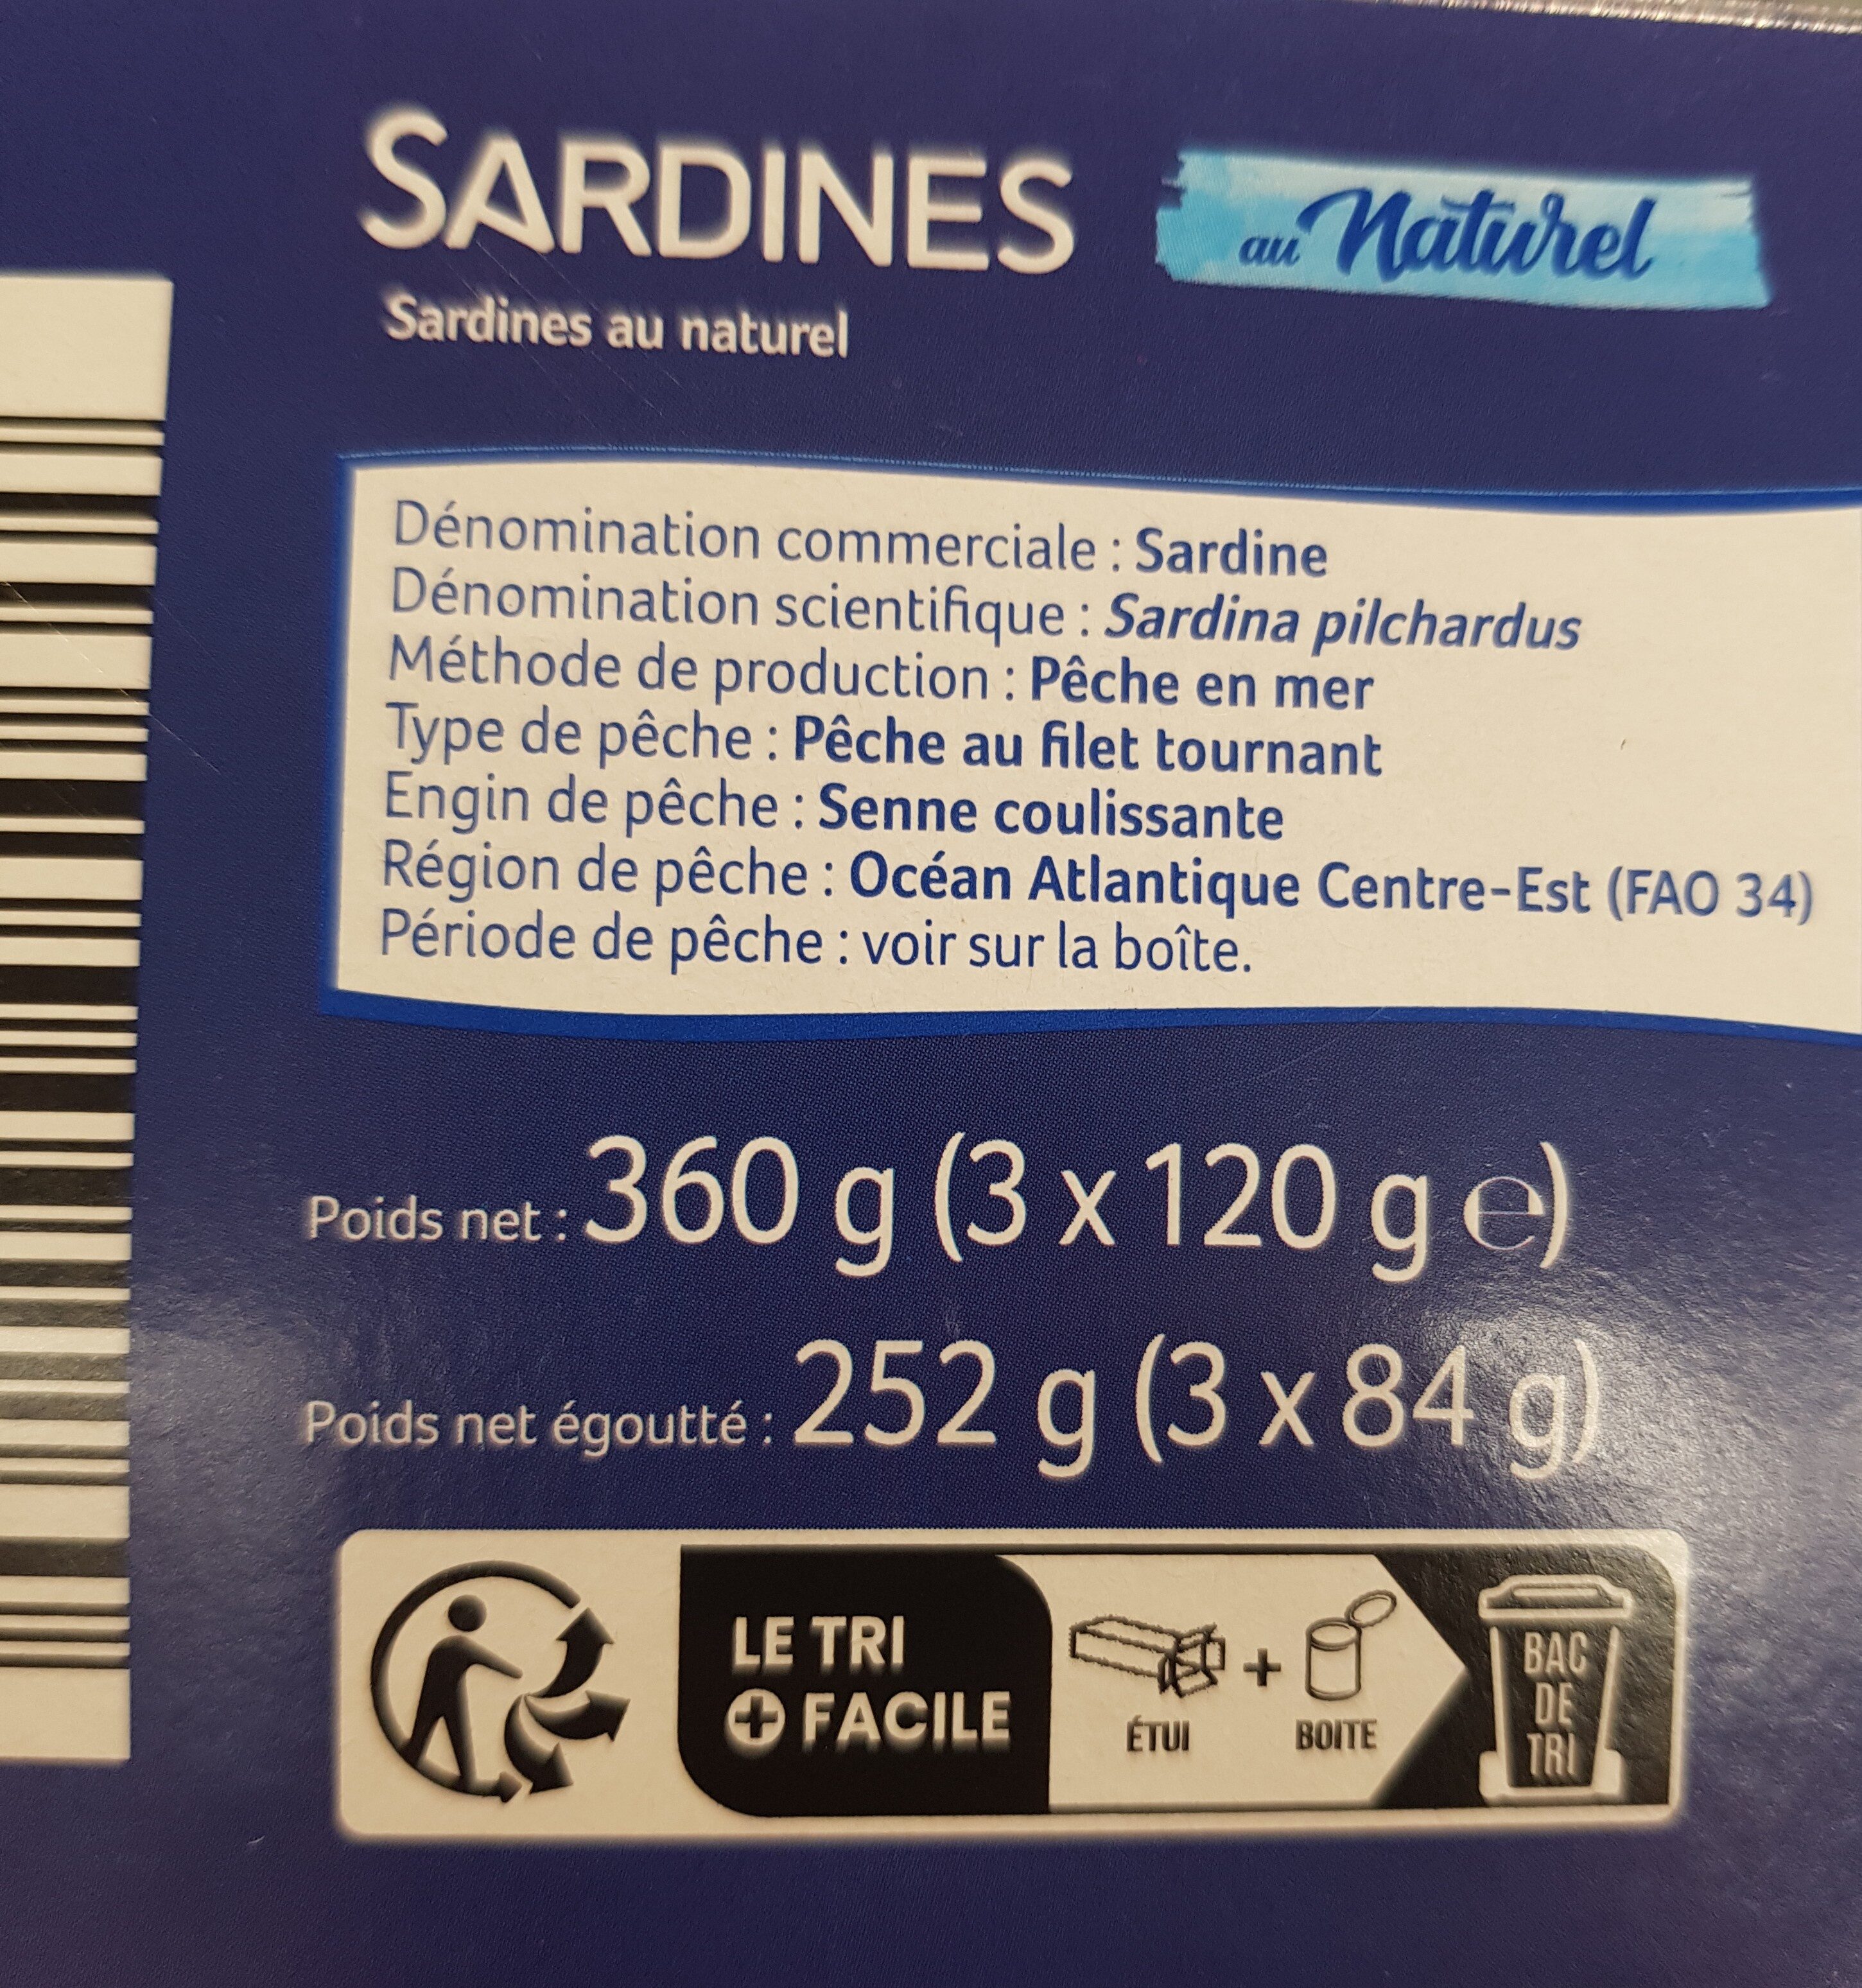 Sardines au naturel - Ingredients - fr